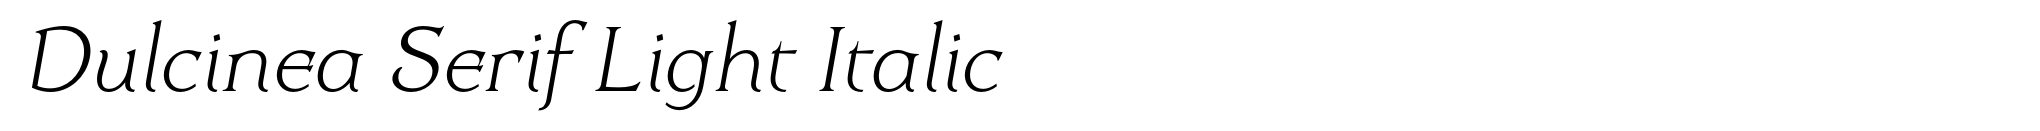 Dulcinea Serif Light Italic image